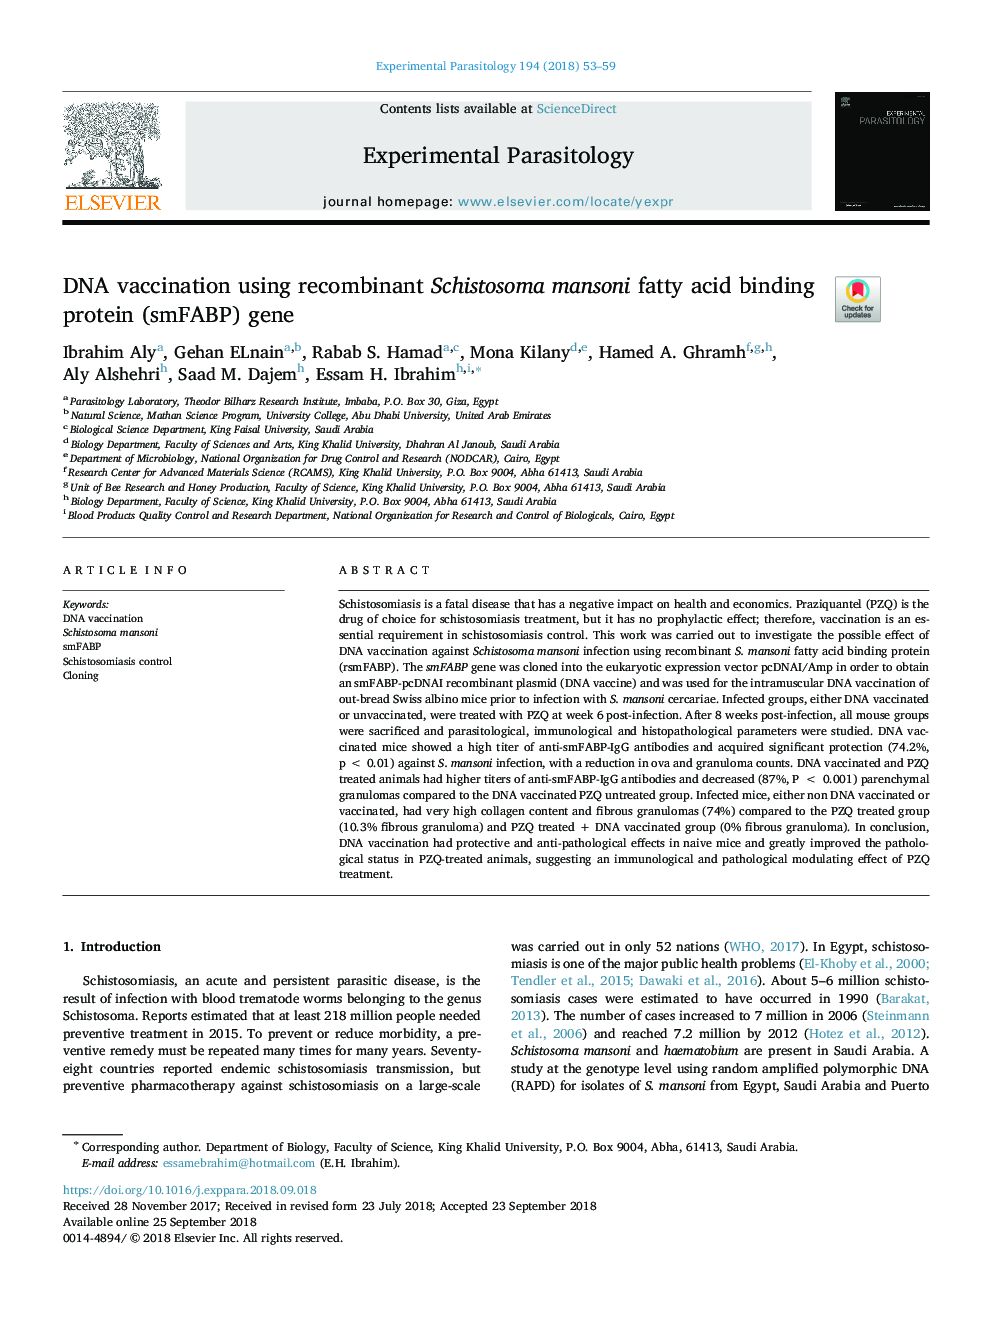 DNA vaccination using recombinant Schistosoma mansoni fatty acid binding protein (smFABP) gene